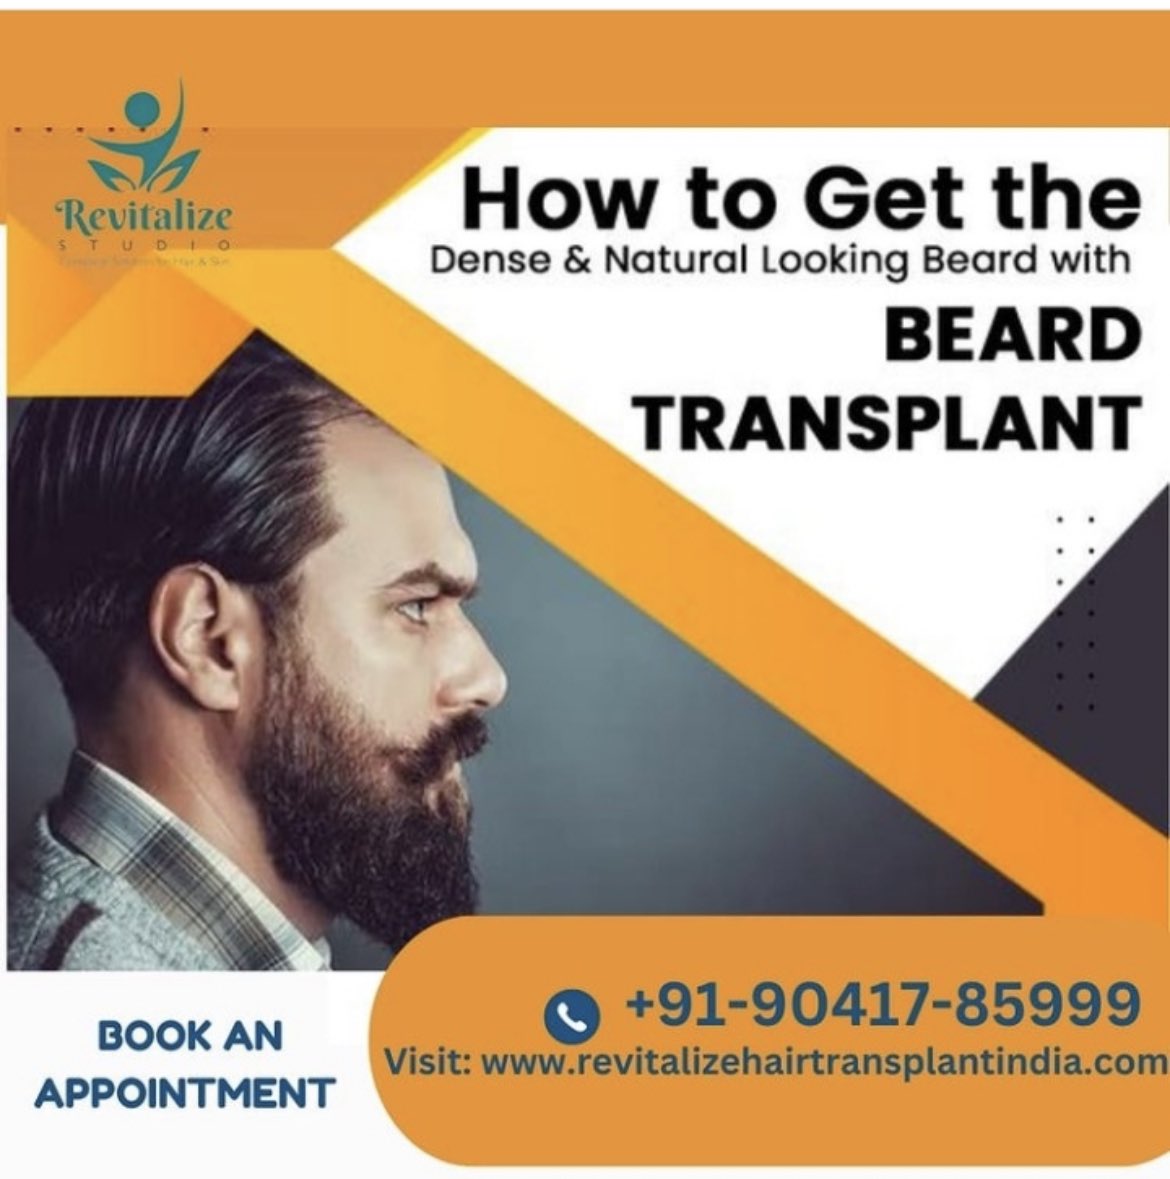 #beardtransplant  at #revitalizestudios 
Visit Now : revitalizehairtransplantindia.com/product/hair-t…
WhatsApp : wa.me/919041785999
Call us: (+91) 90417-85999
---------
#hairtransformation #hairloss #hairclinic #hairlosssolution #beardlover  #transplant #hairtransformations  #prptherapy